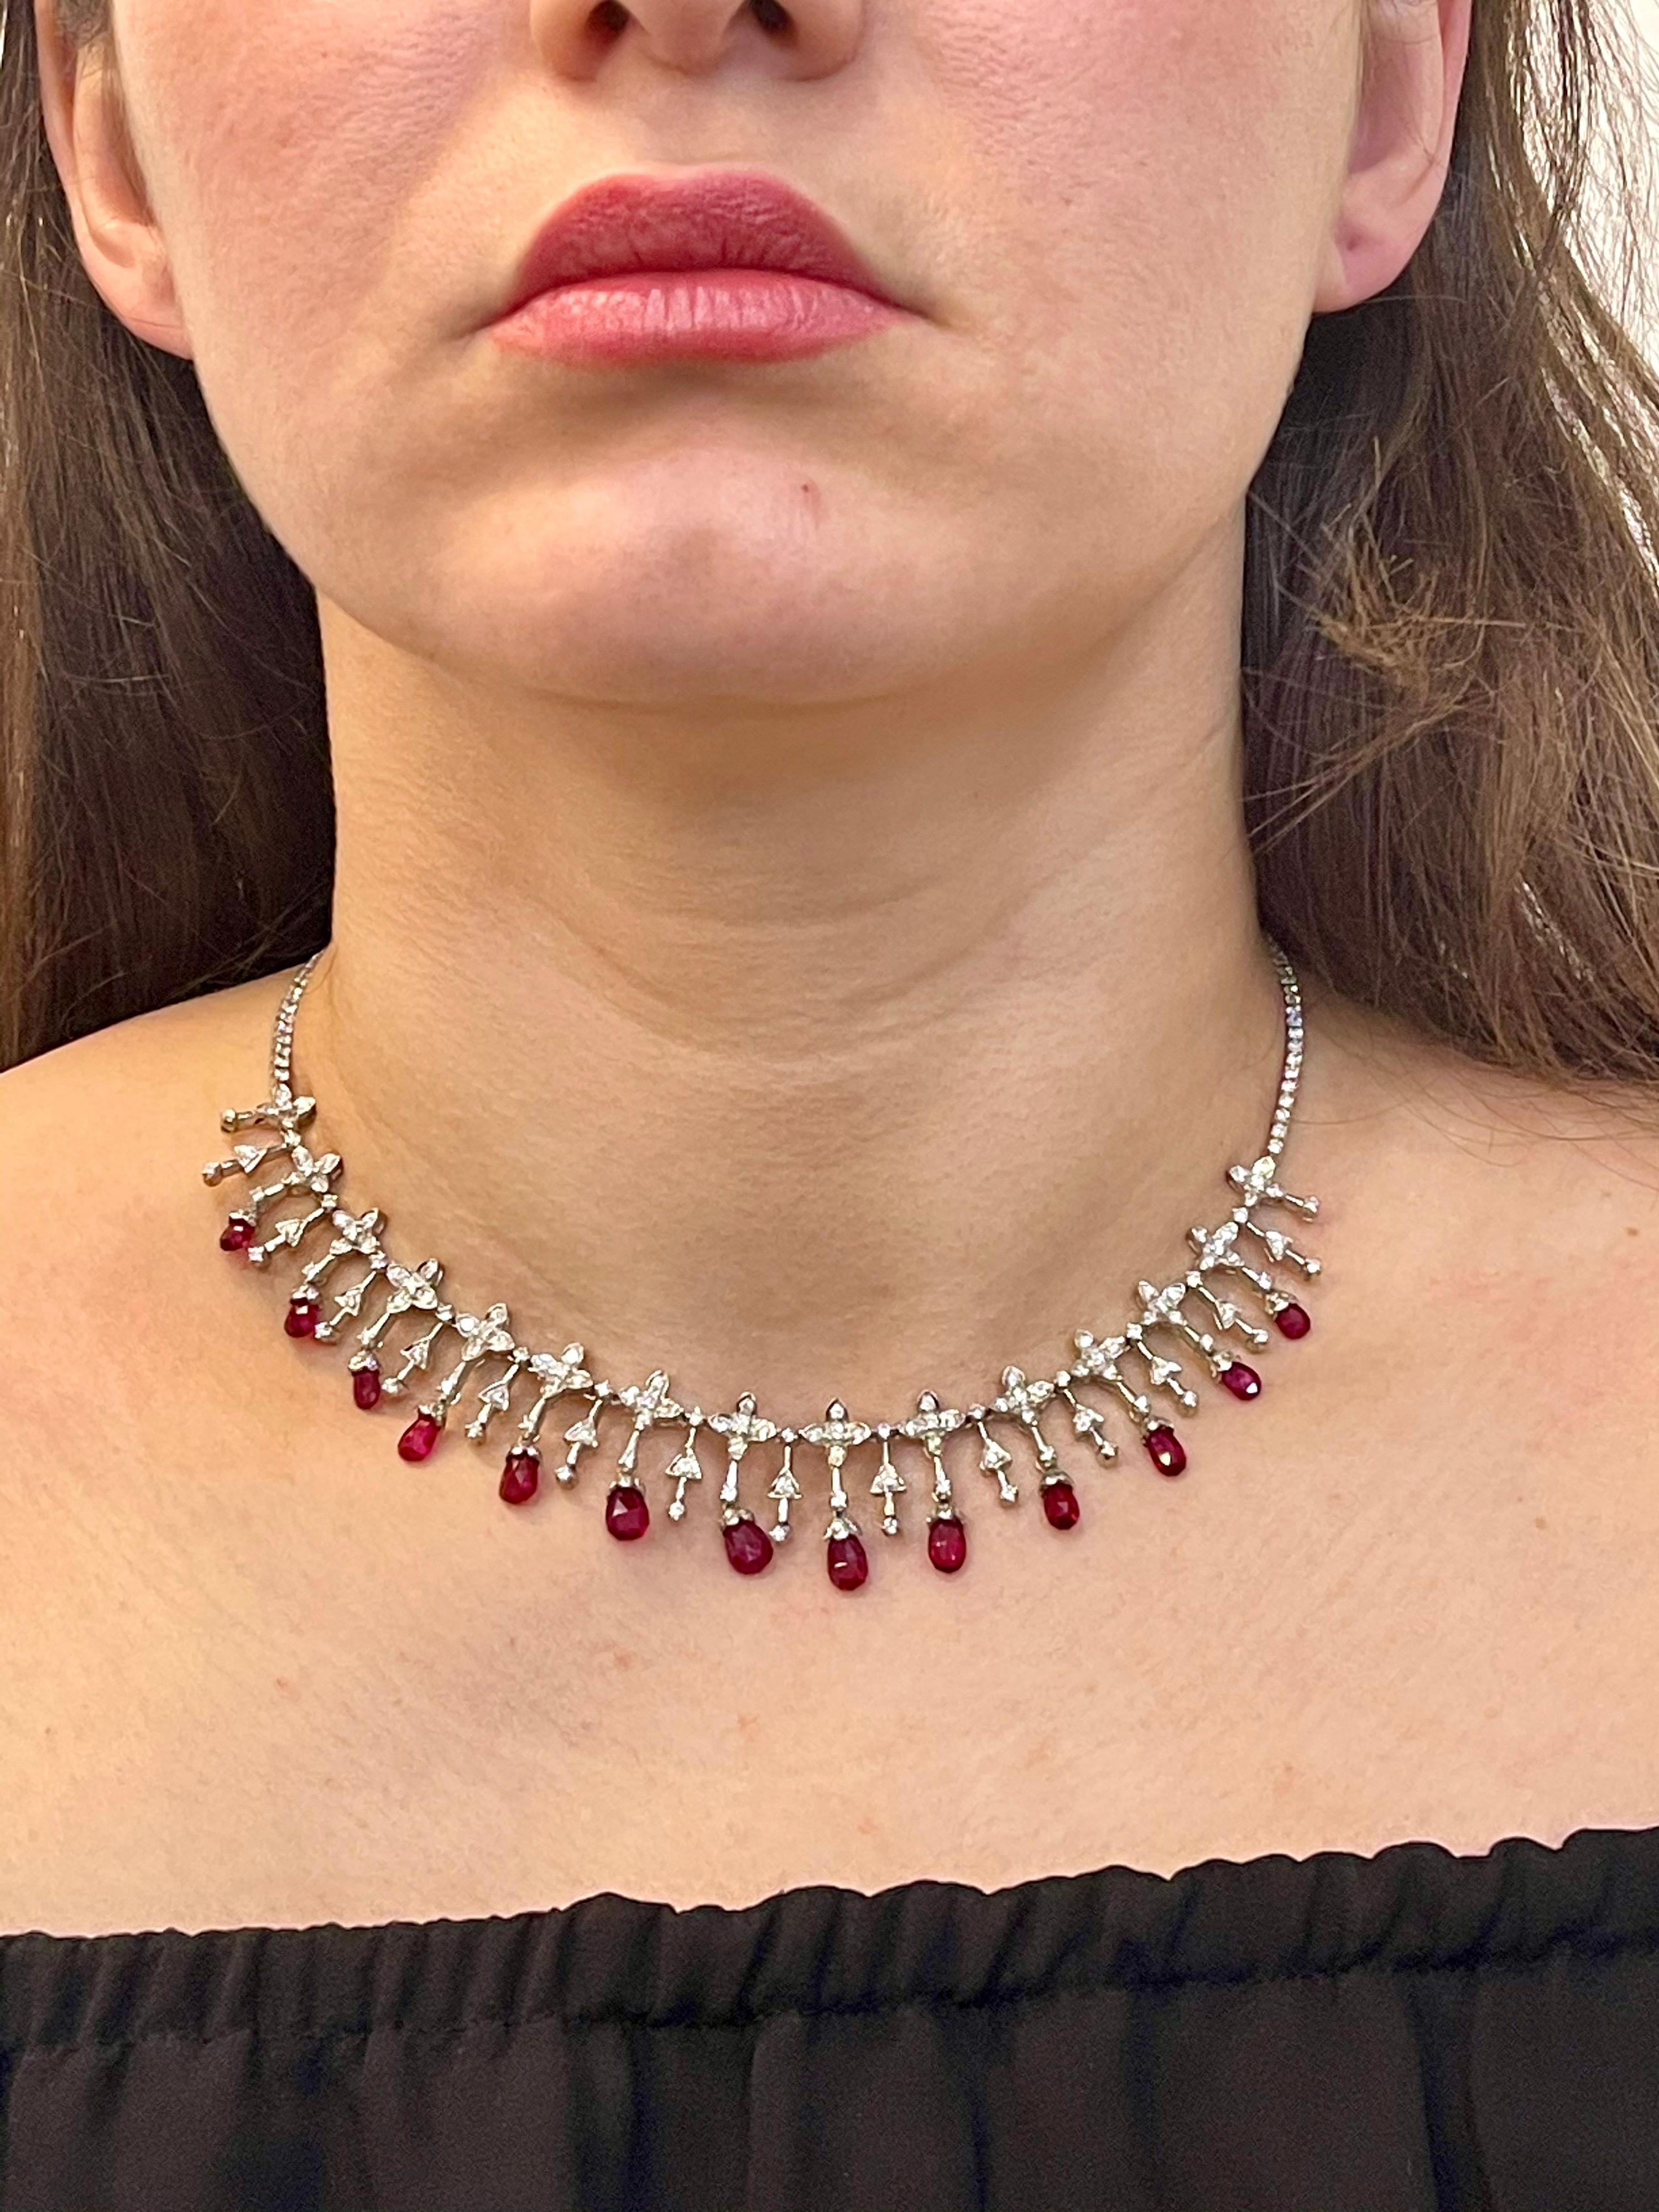 18 Ct Natural Ruby Briolette & 8 Ct Diamond Necklace 18 Karat White Gold, Estate For Sale 3